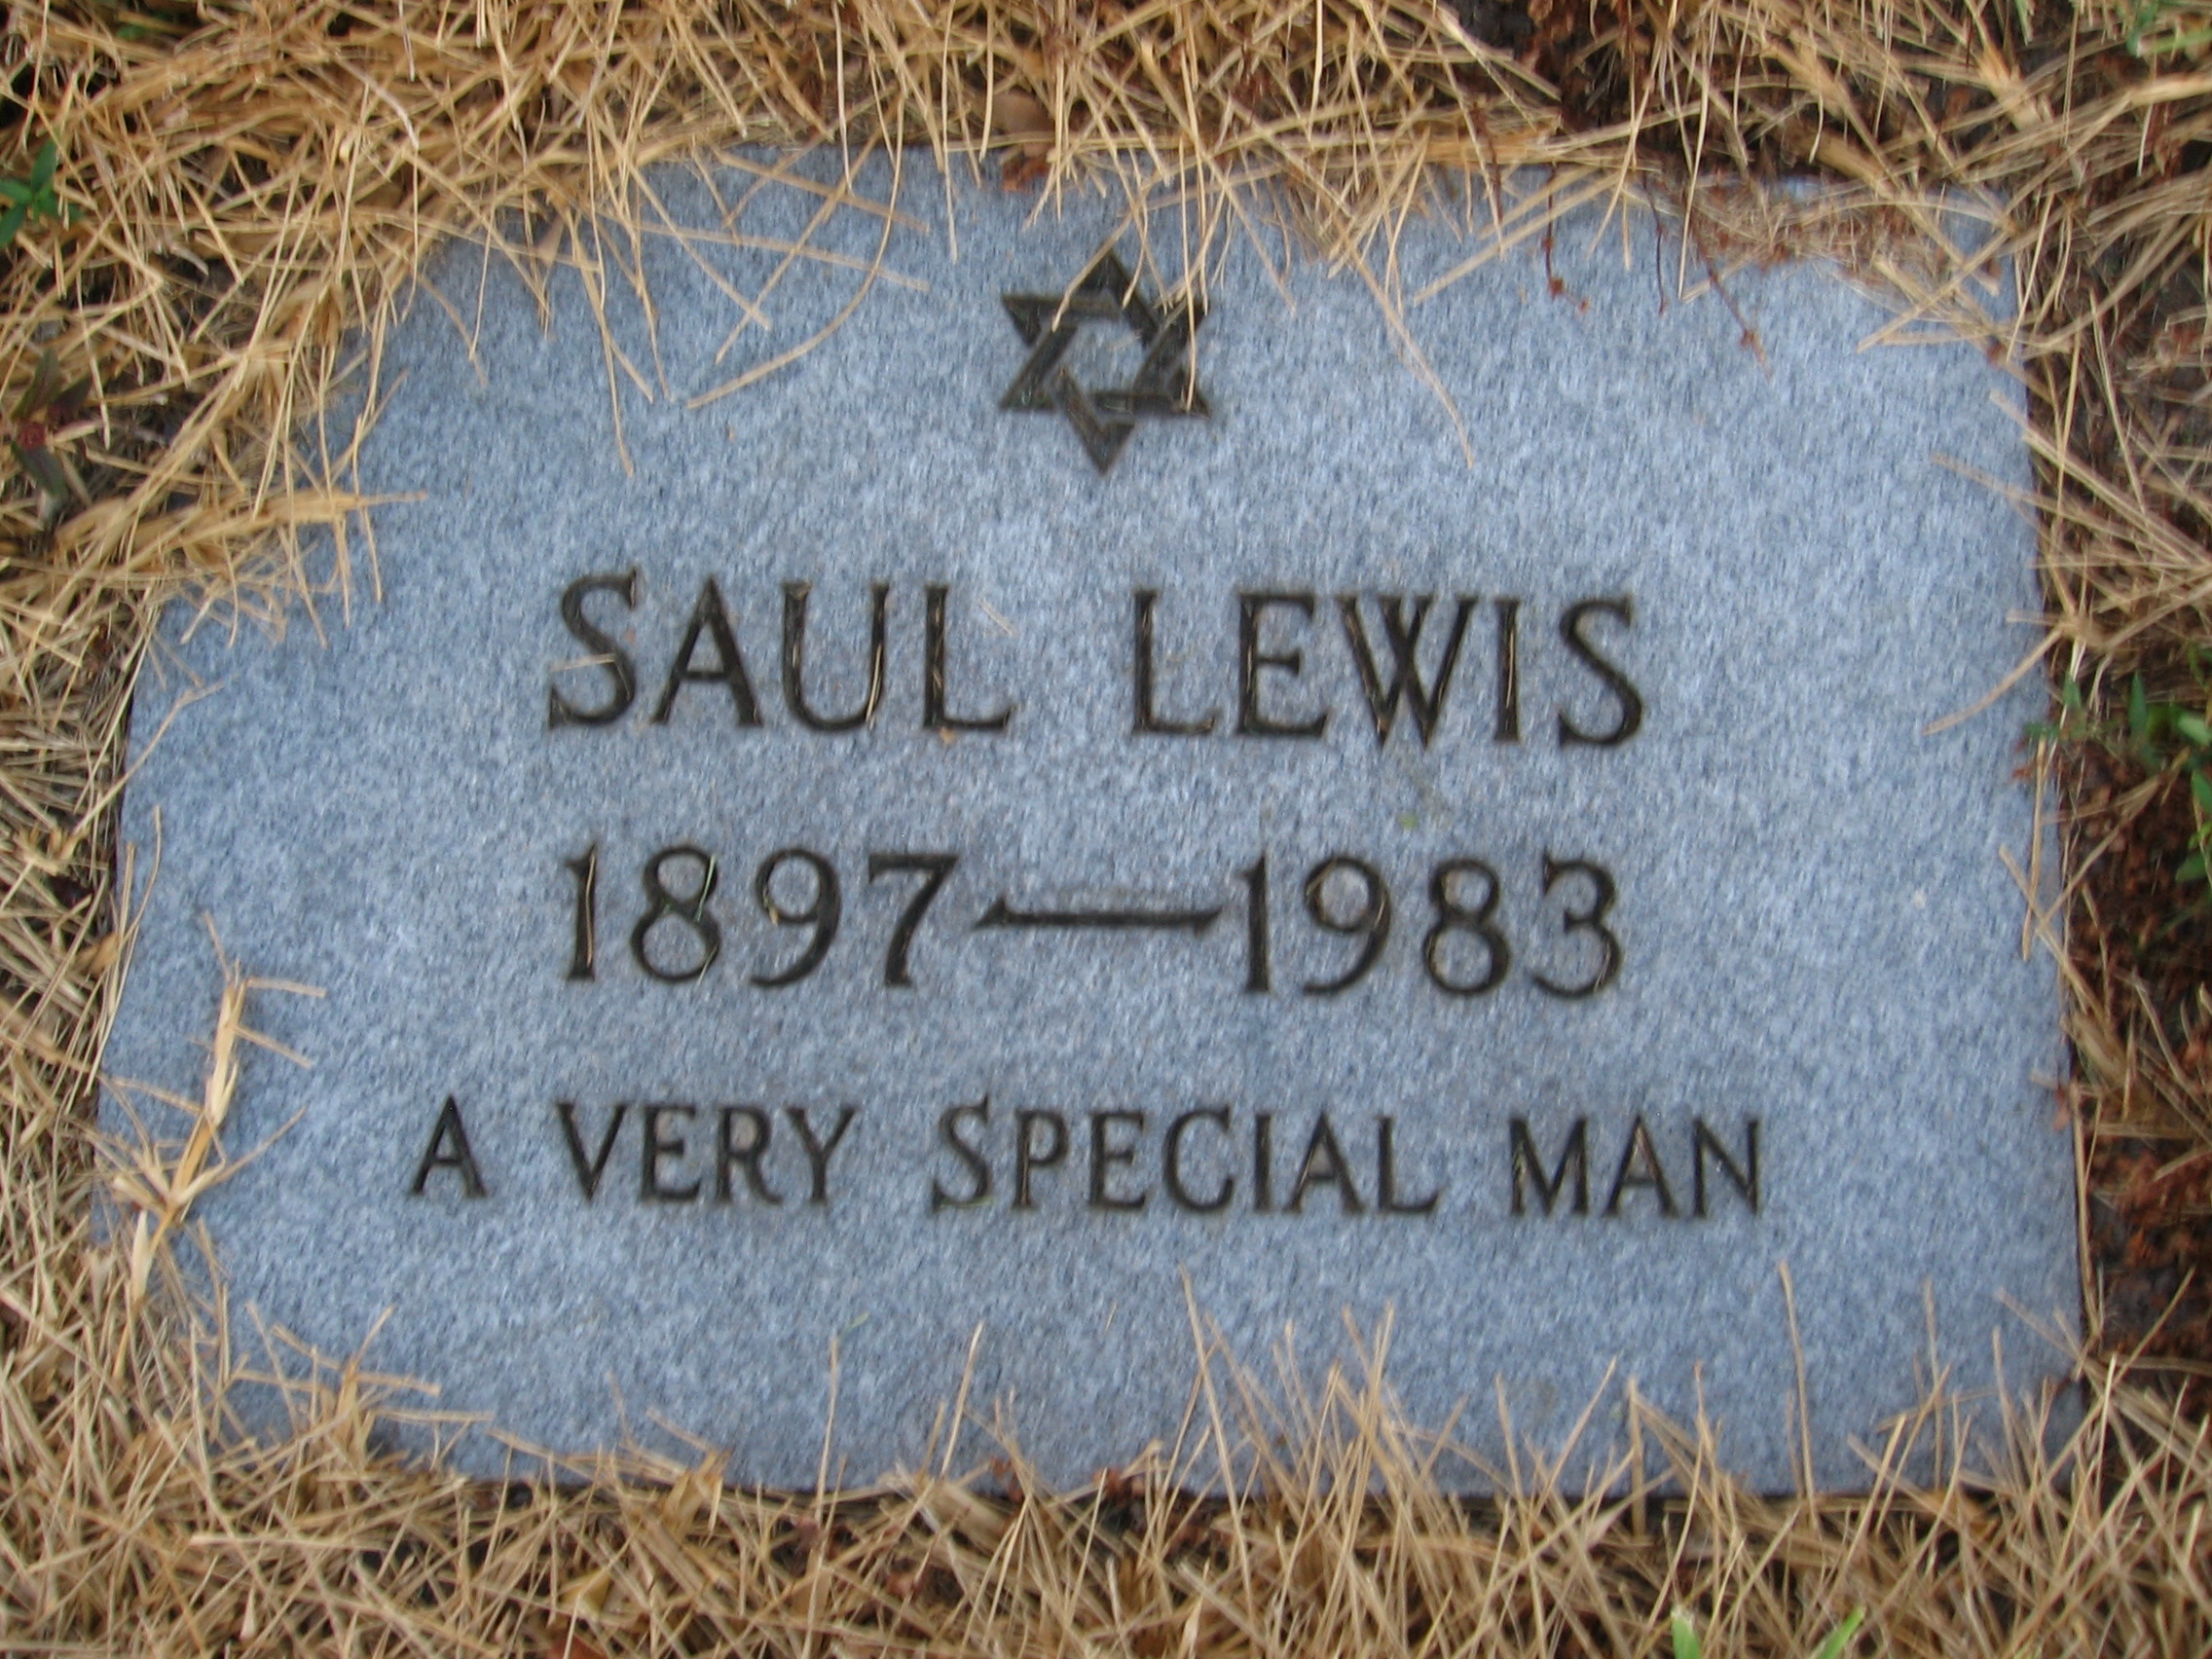 Saul Lewis